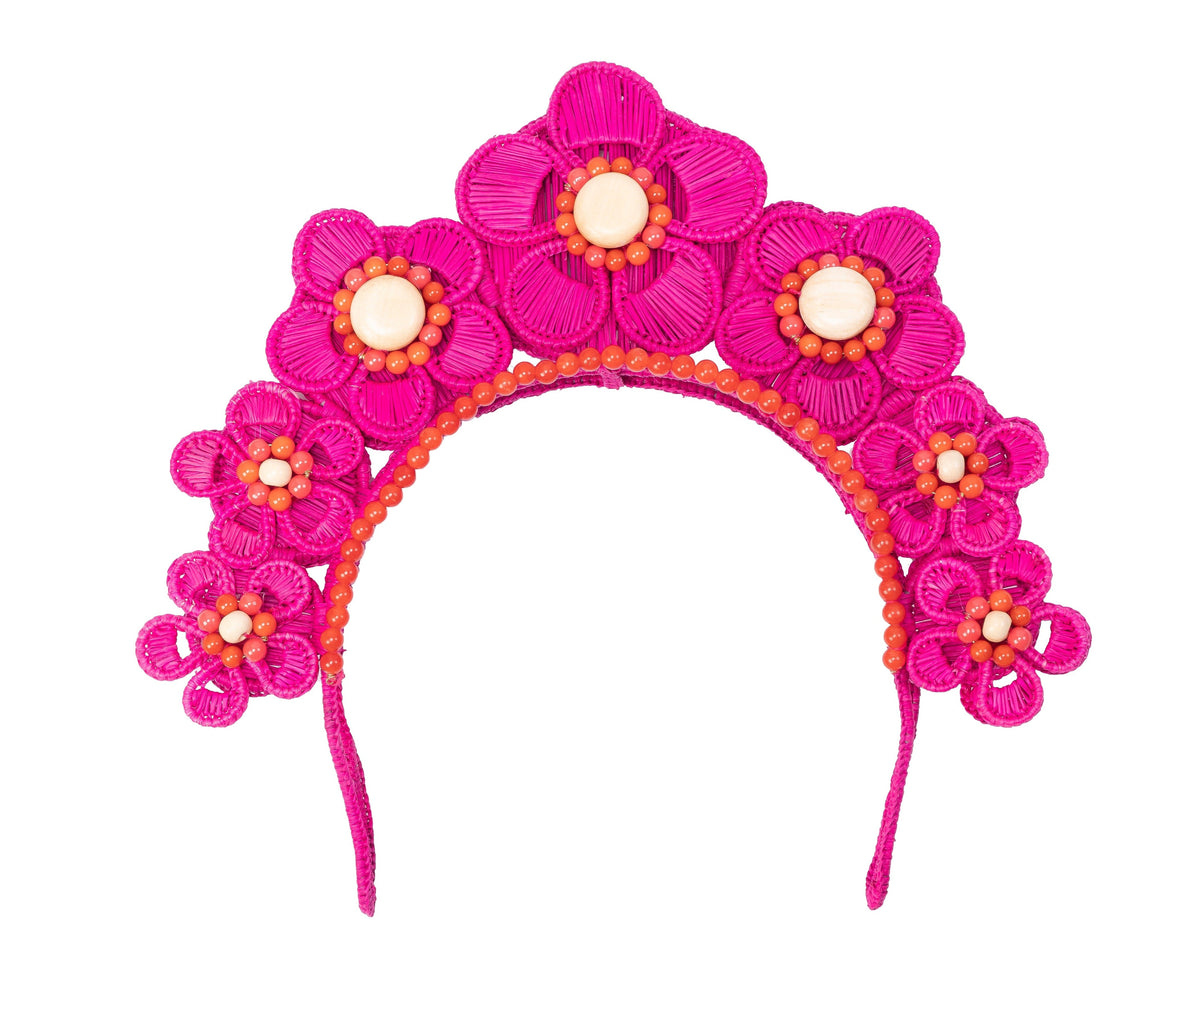 Flower Iraca Headpiece in Hot Pink